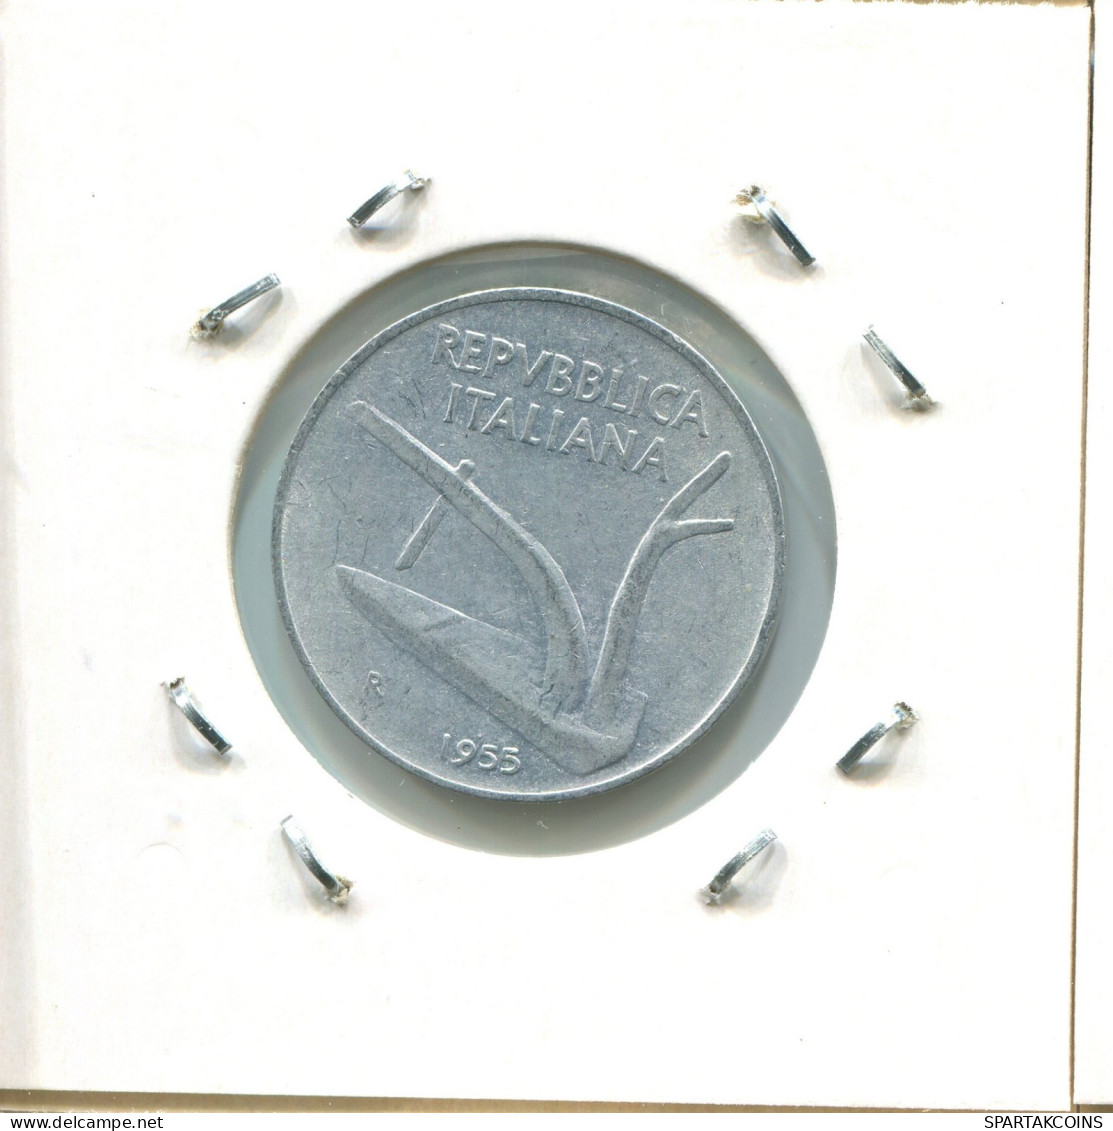 10 LIRE 1955 R ITALY Coin #AW606.U.A - 10 Lire